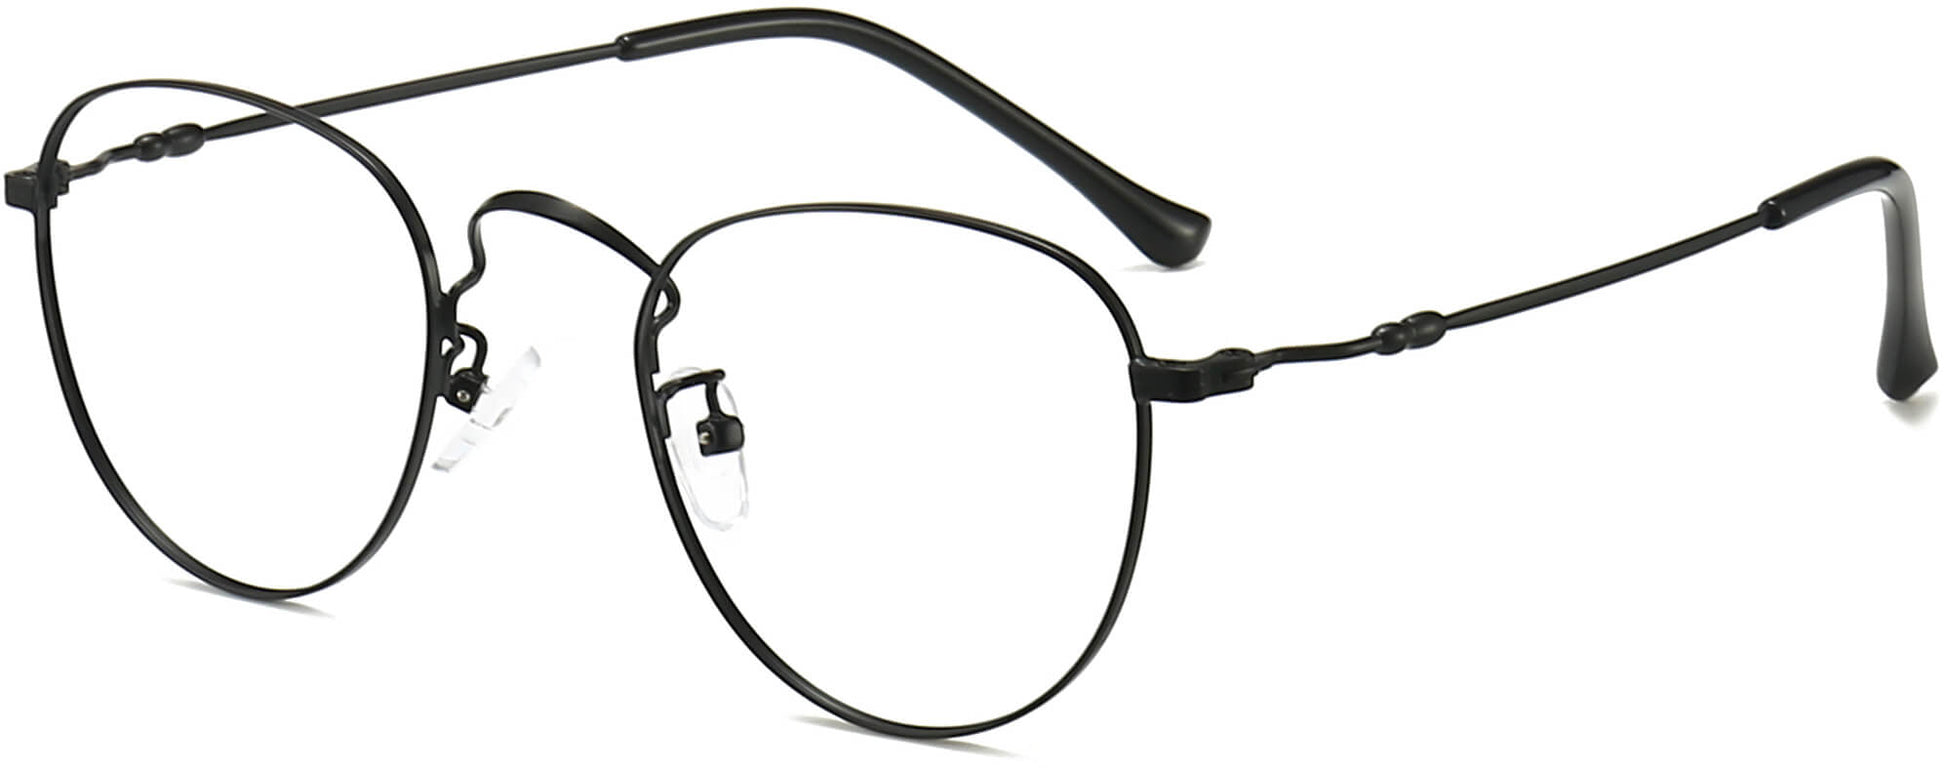 Conrad Round Black Eyeglasses from ANRRI, angle view